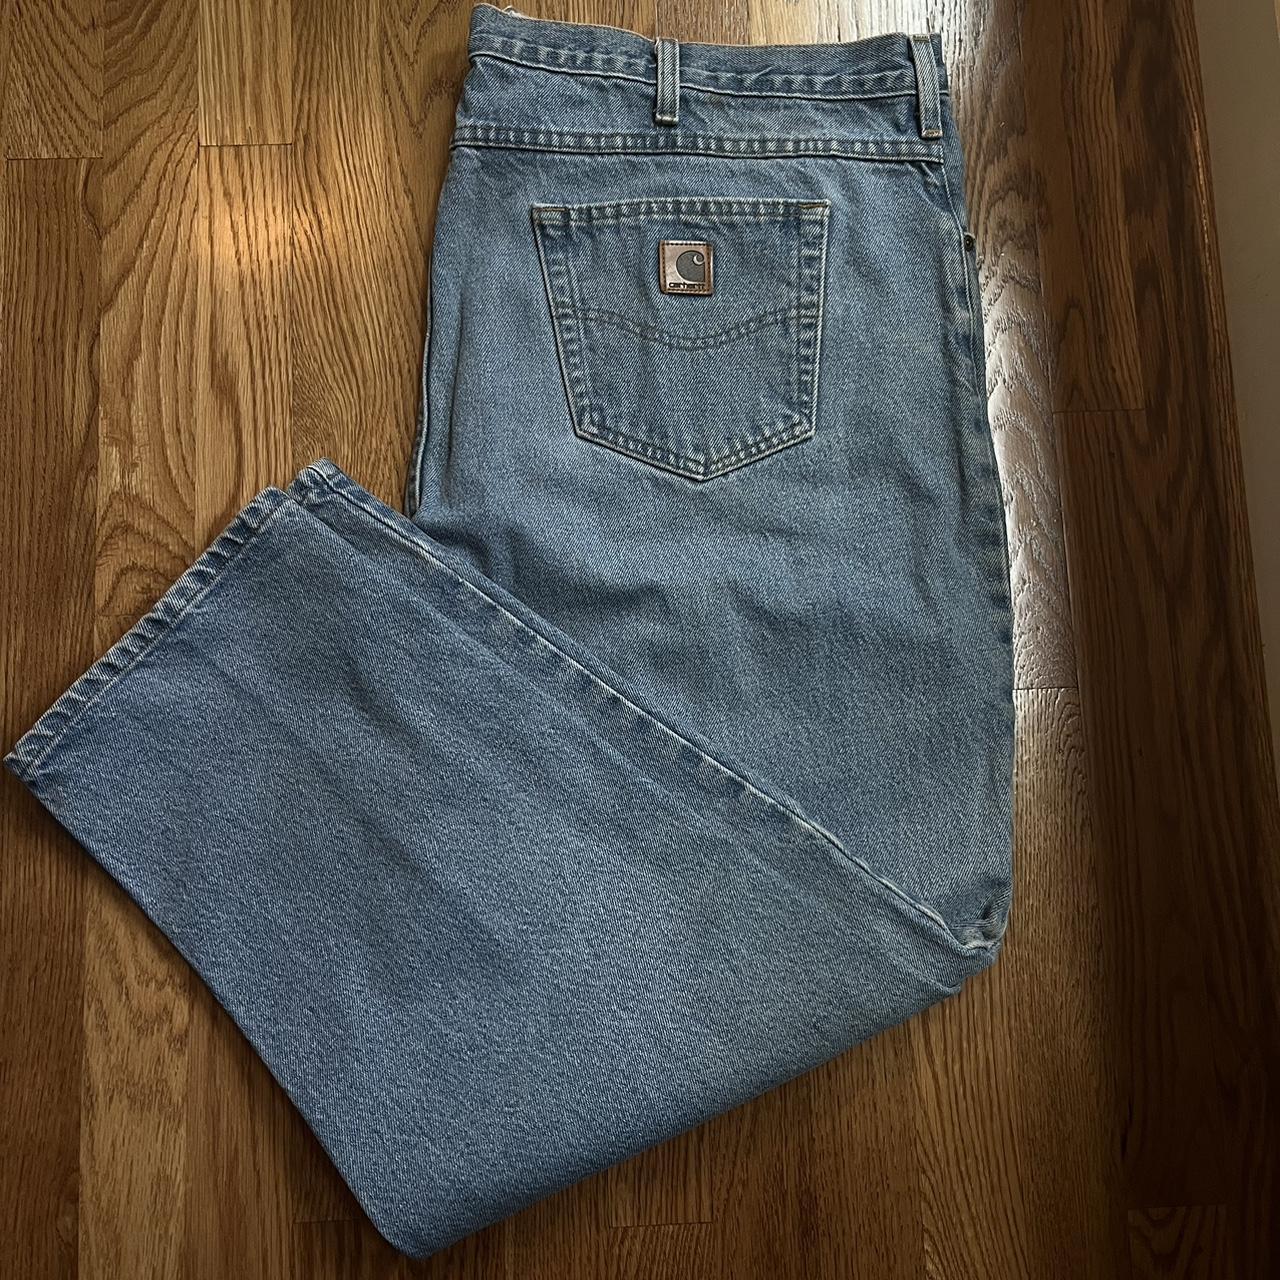 Vintage Carhartt Jeans Size 46x30 Thrifted, light... - Depop